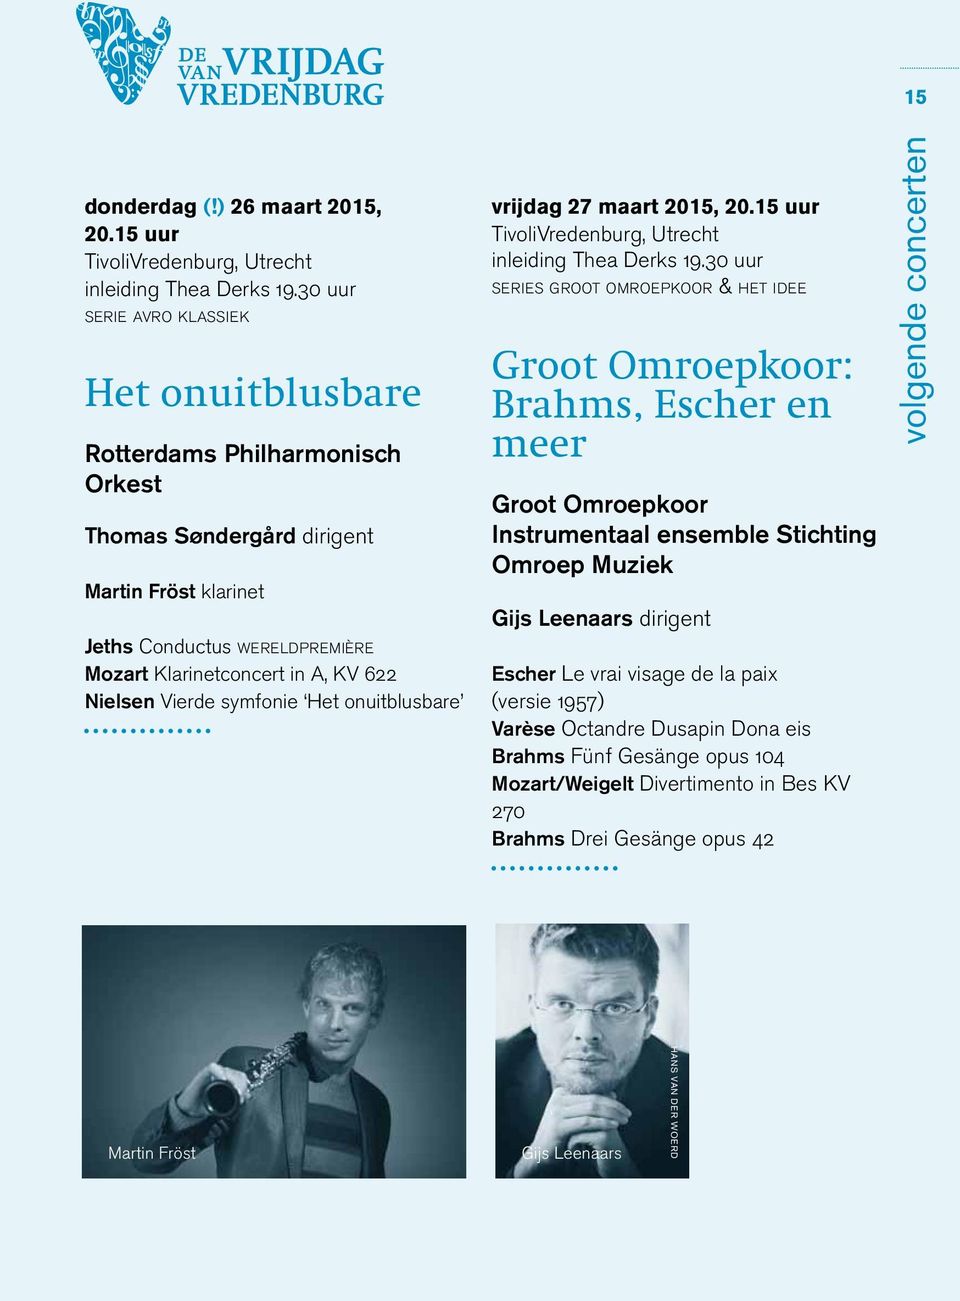 Nielsen Vierde symfonie Het onuitblusbare vrijdag 27 maart 2015, 20.15 uur TivoliVredenburg, Utrecht inleiding Thea Derks 19.